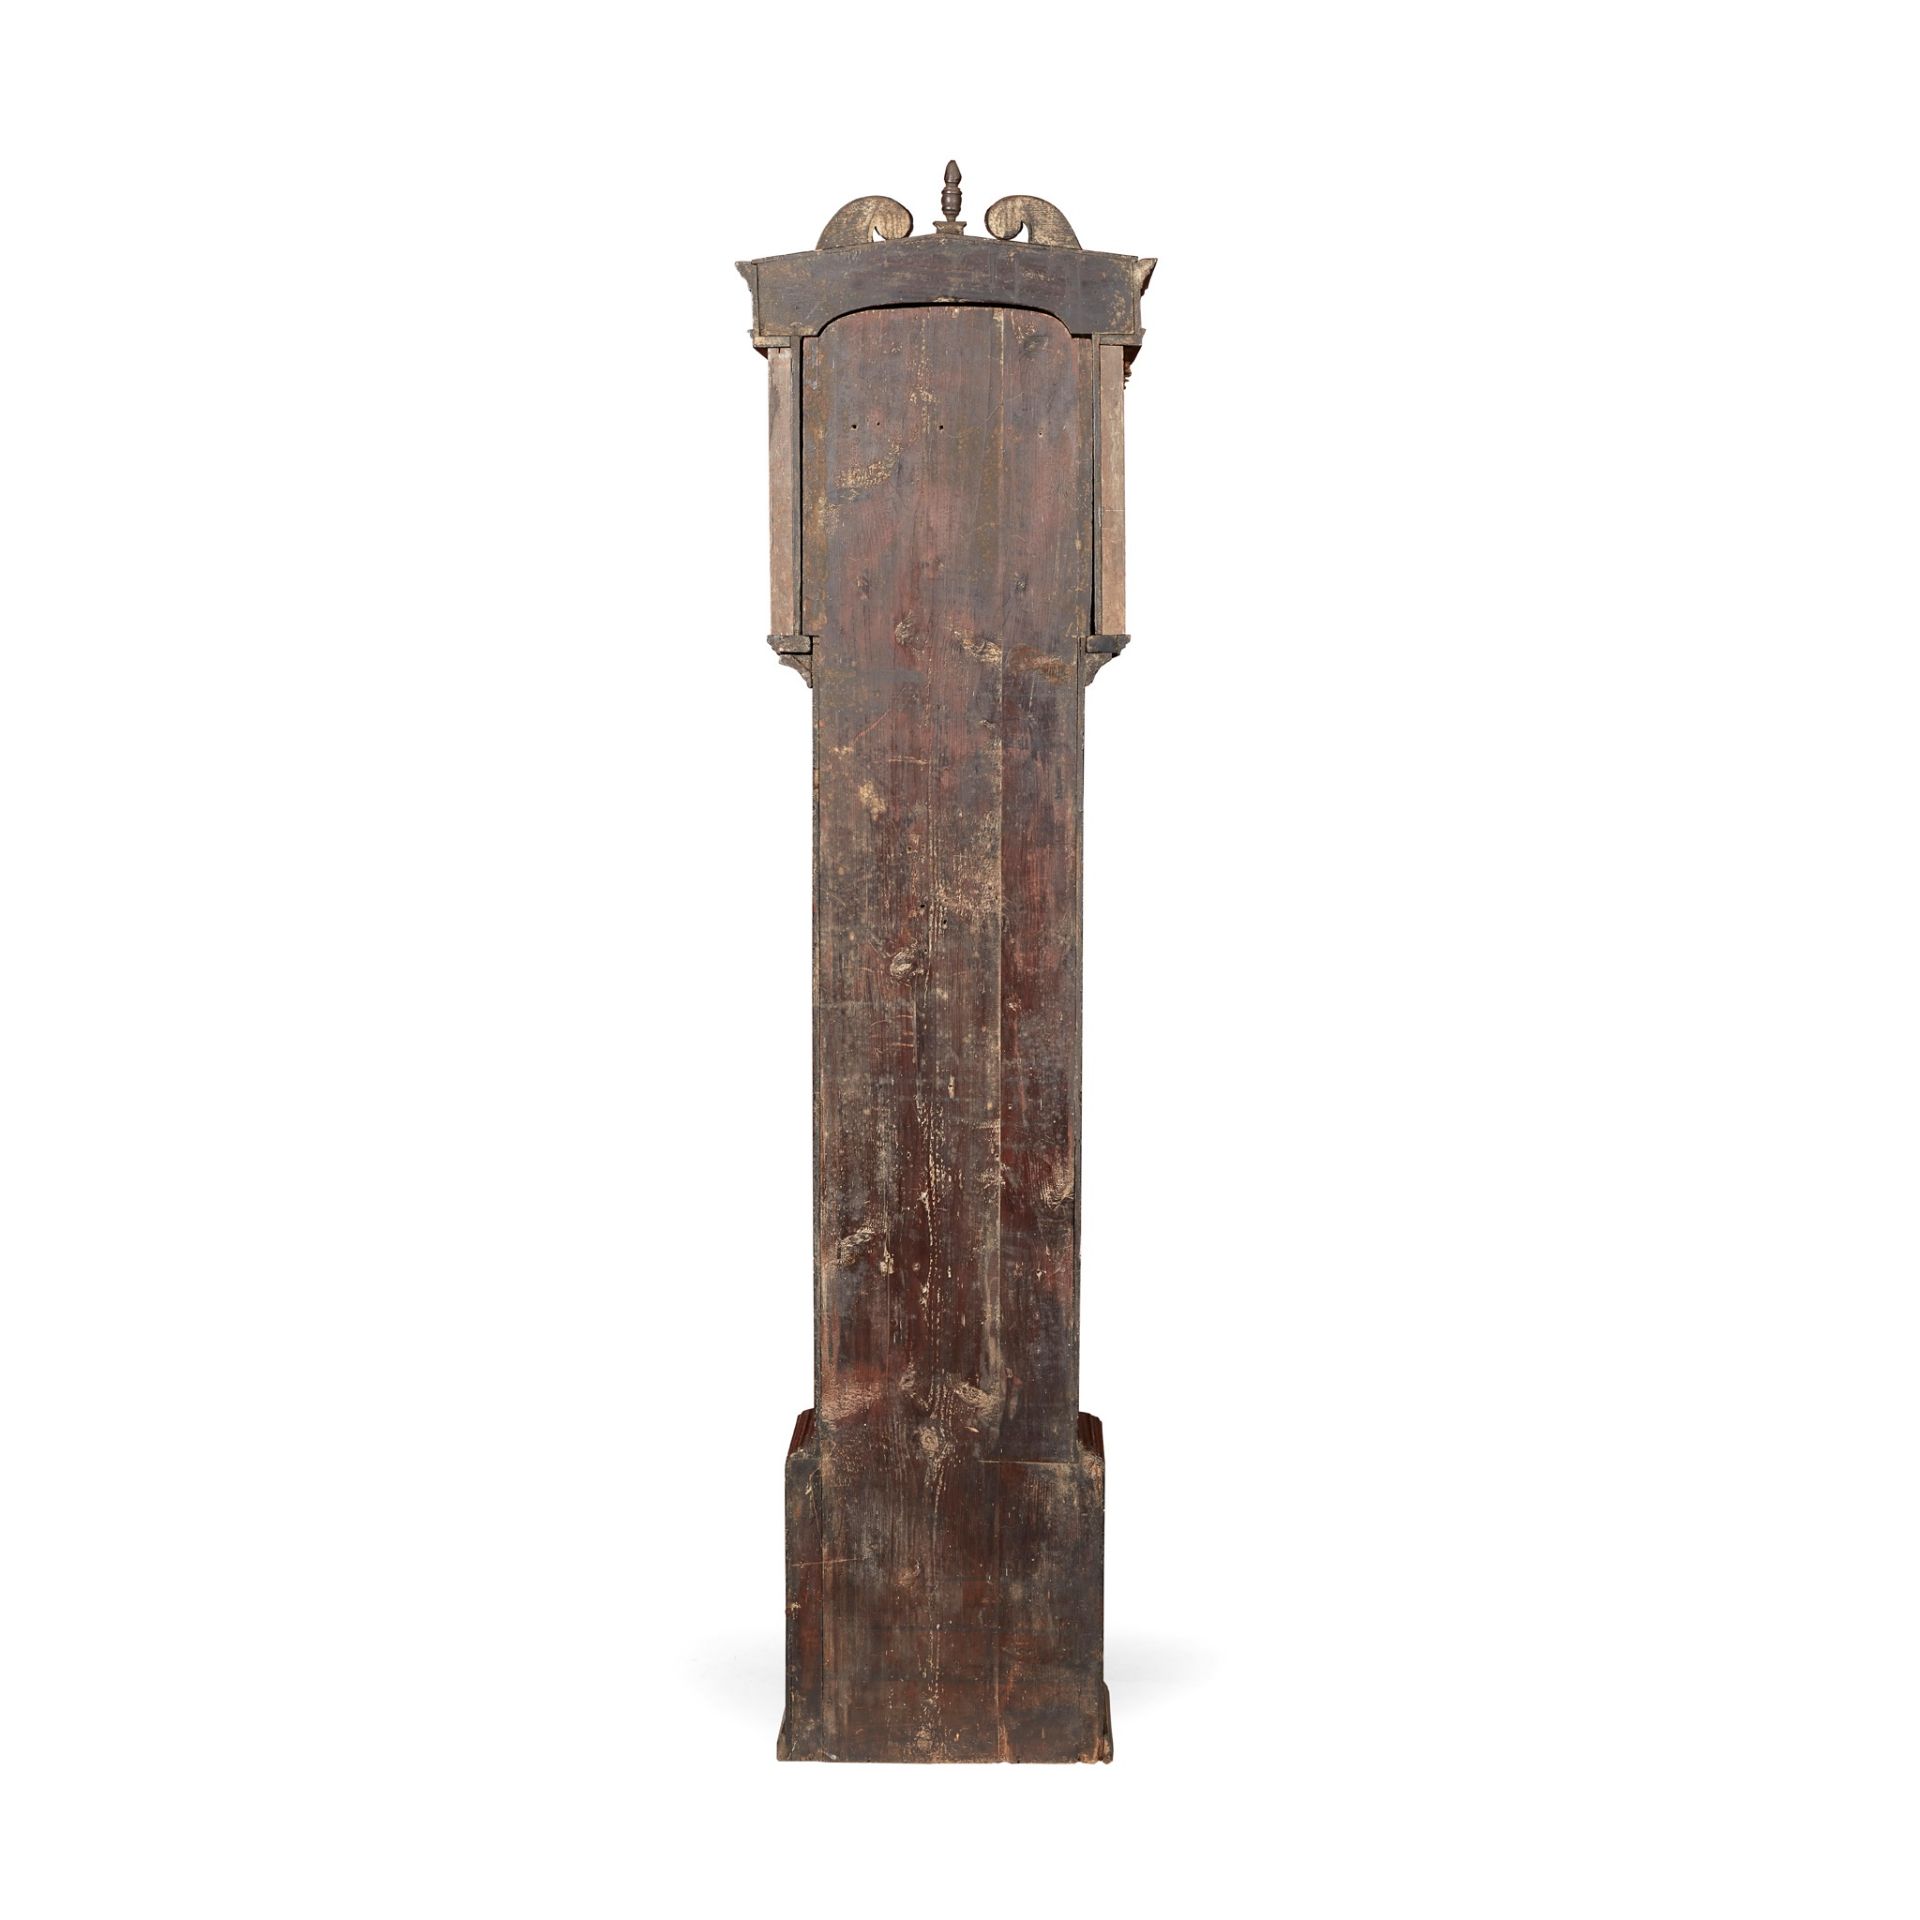 A SCOTTISH GEORGE III LONGCASE CLOCK BY DAVID HILL, EDINBURGH LATE 18TH CENTURY - Image 3 of 3